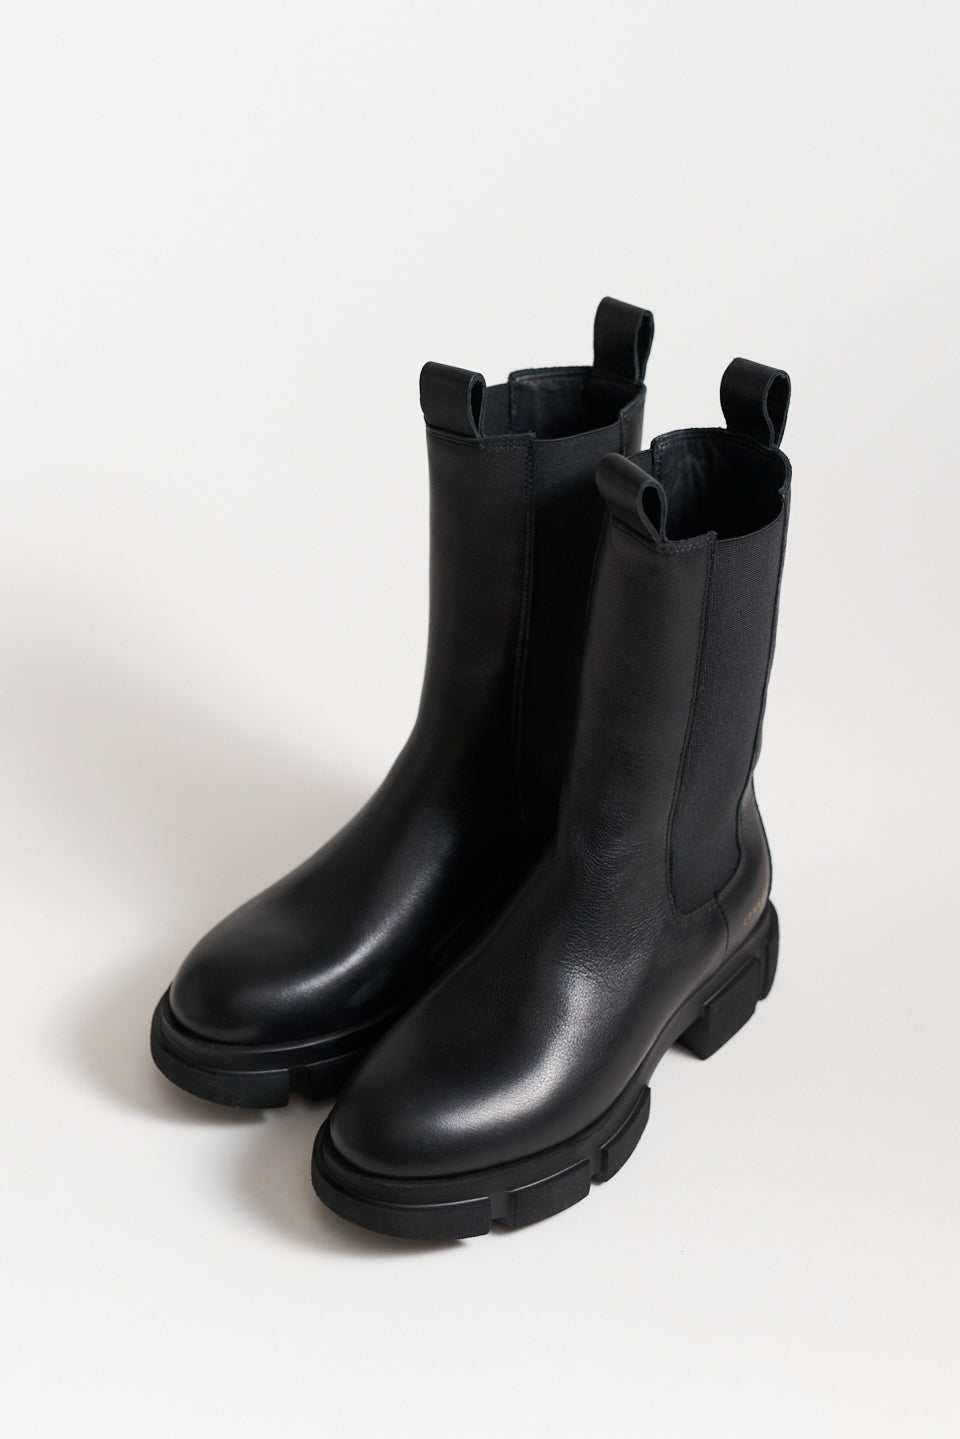 Vitello Black Chelsea Boots CPH500BLACK - 4